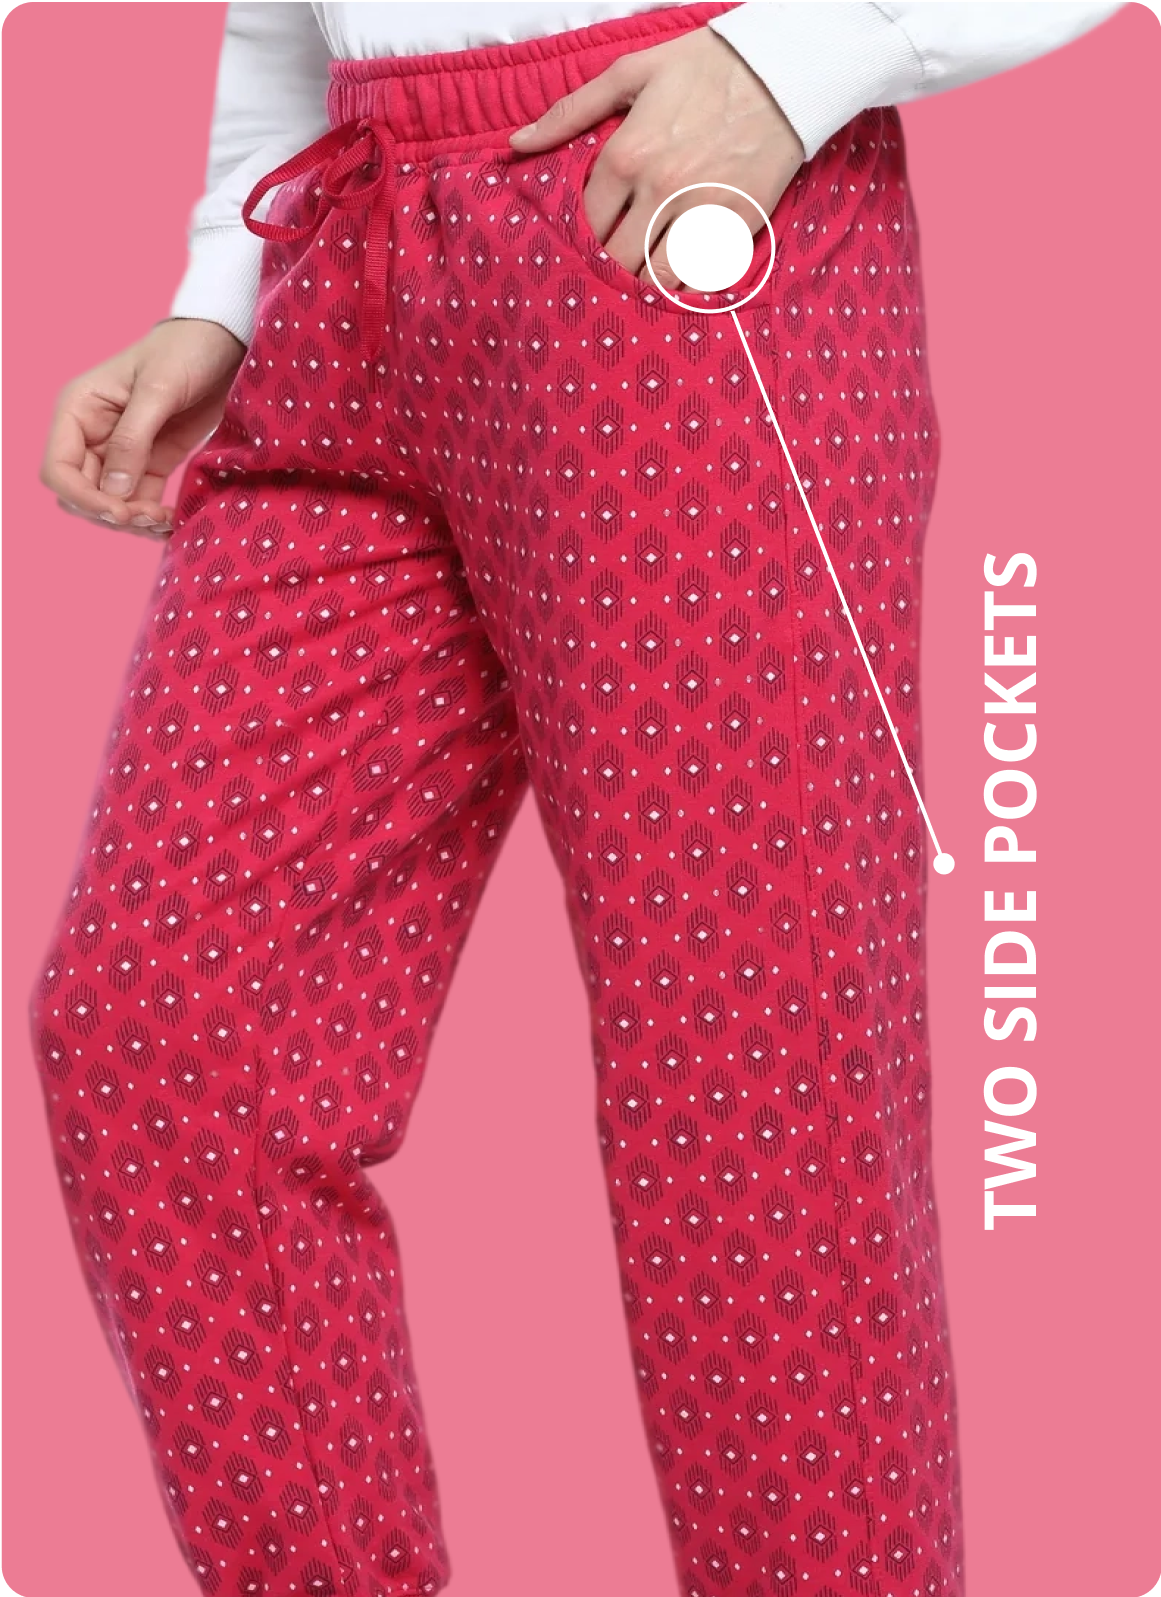 Cotton Pajama Pants in a Bag - Sea Shells Print | The Hawaii Store